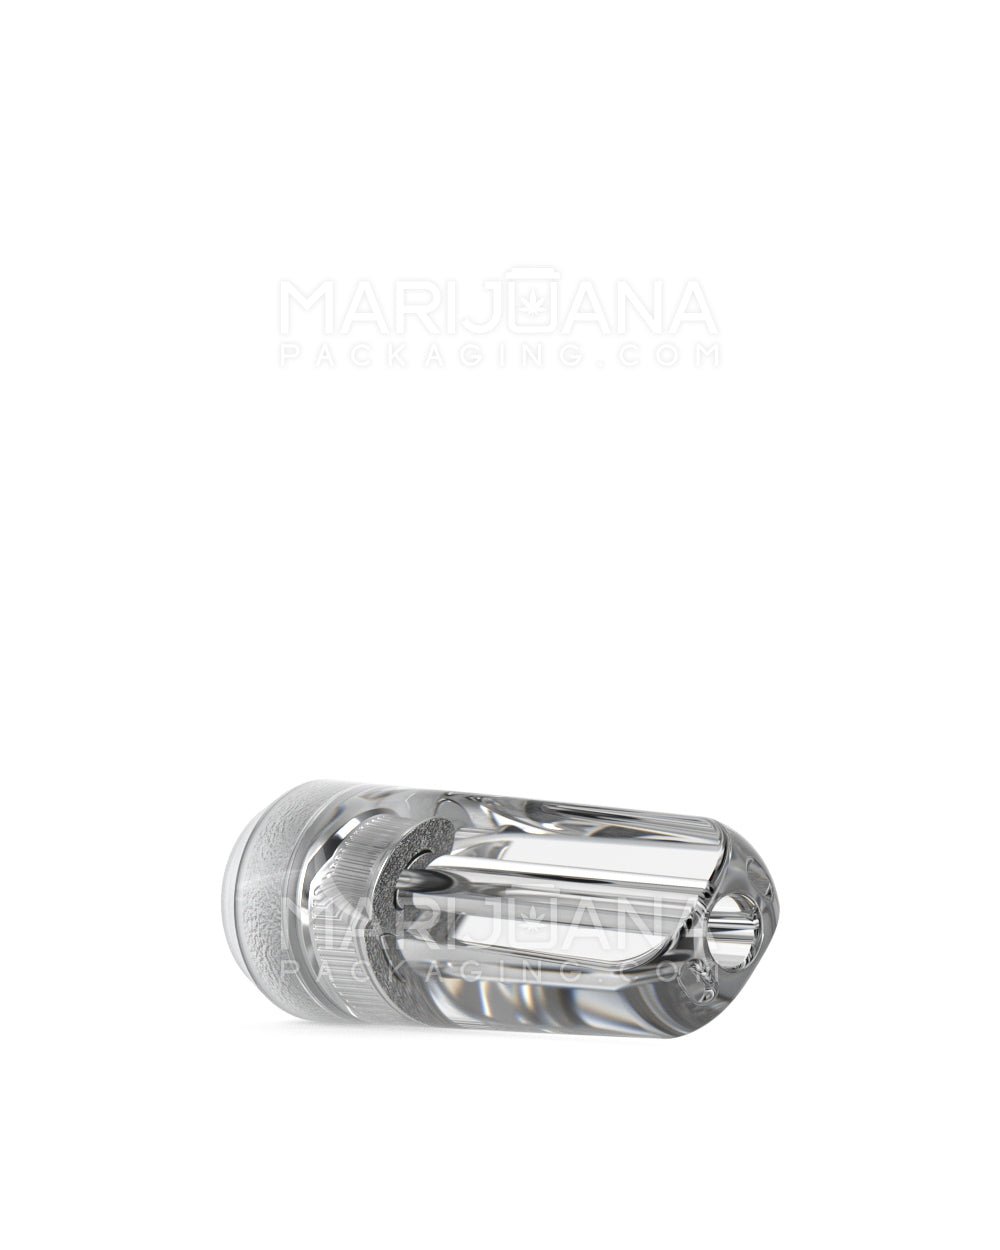 RAE | Flat Vape Mouthpiece for Hand Press Plastic Cartridges | Clear Plastic - Hand Press - 3600 Count - 5